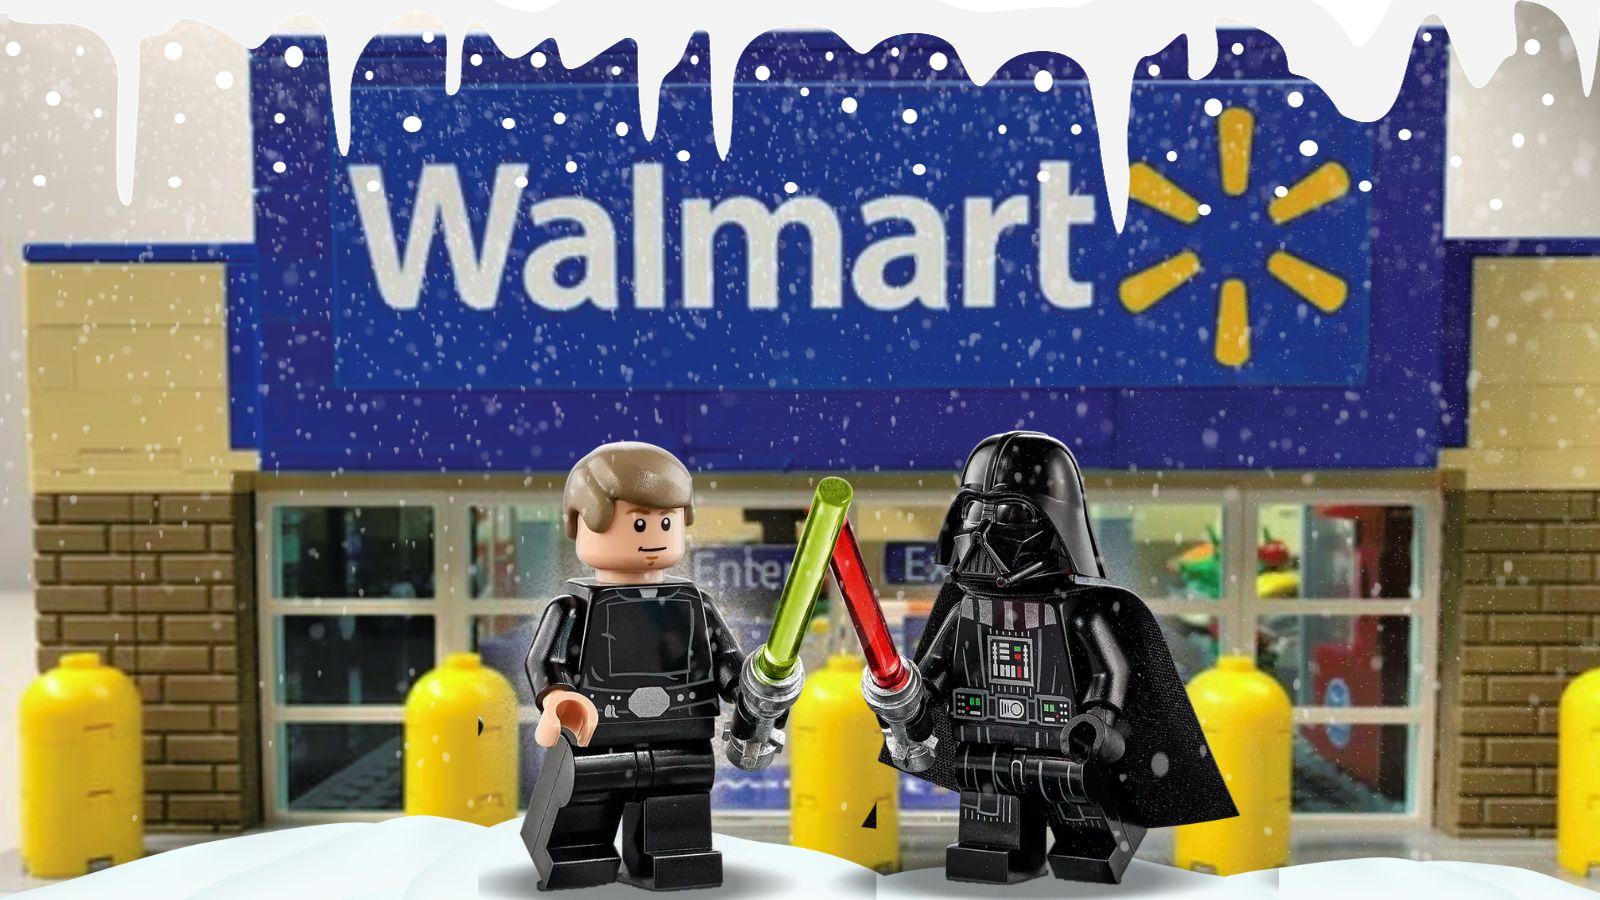 Luke Skywalker and Darth Vader LEGO minifigures in front of Walmart.